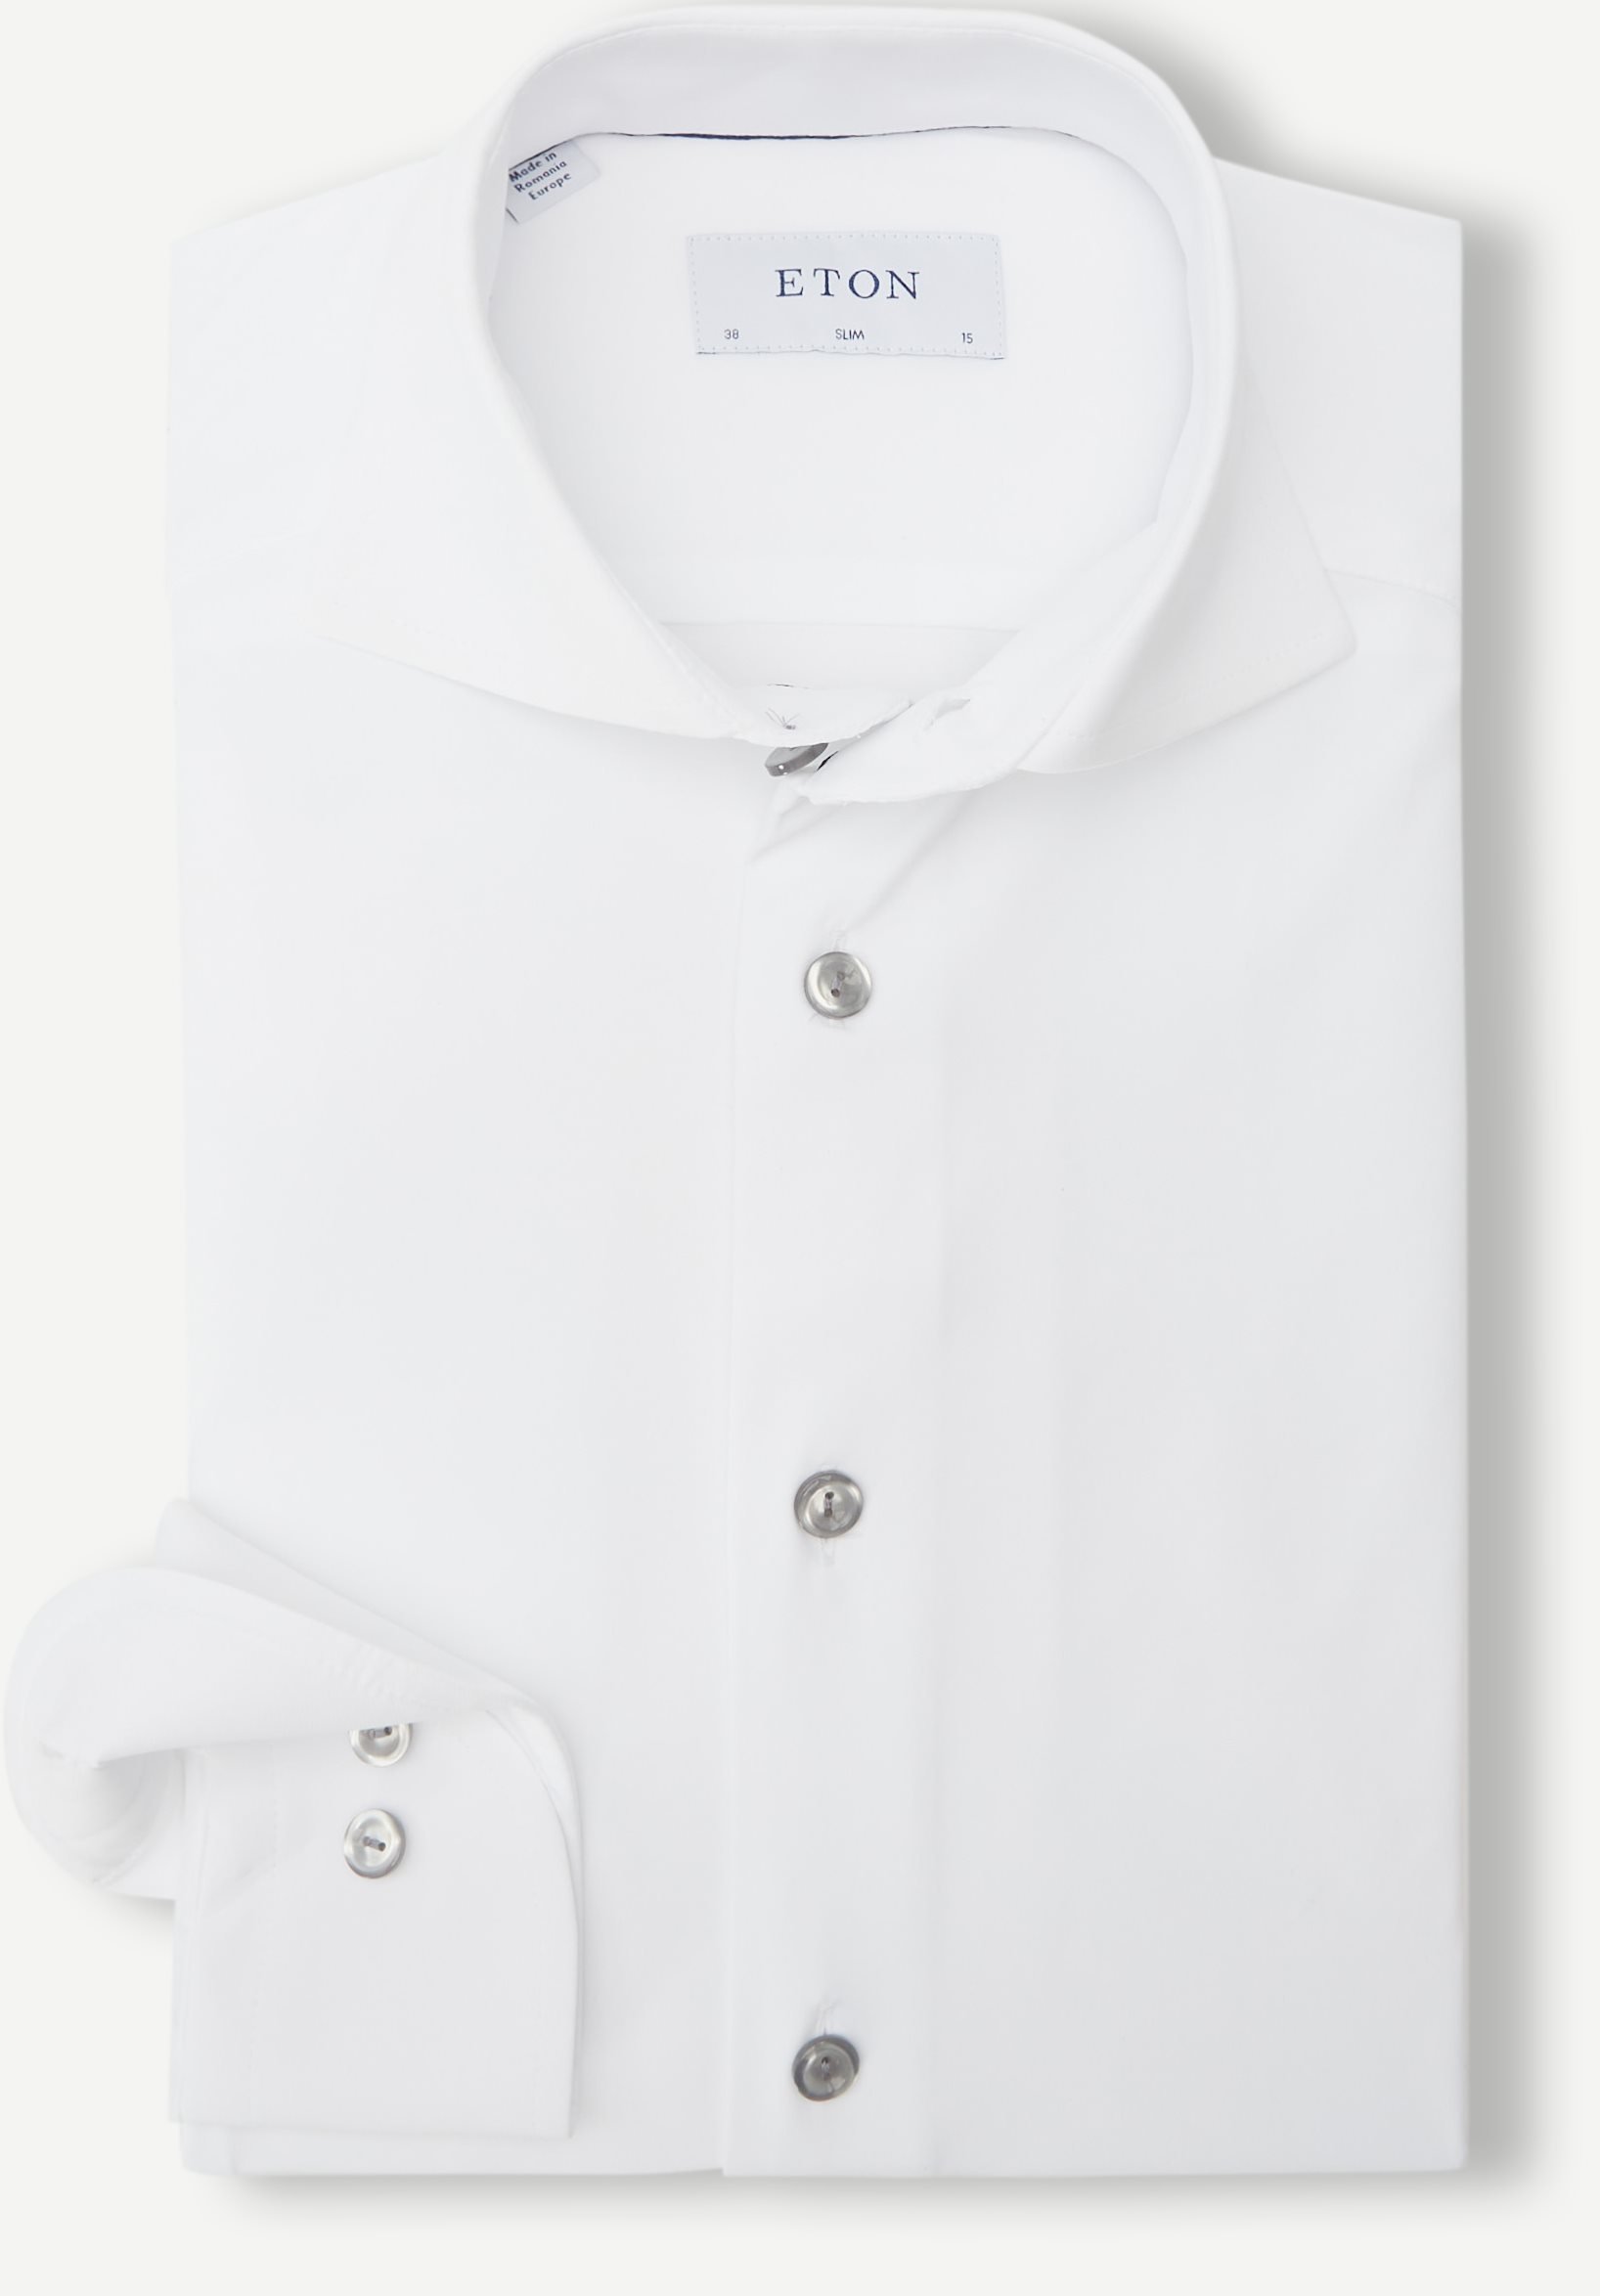 Eton Shirts 8005 89 00 White